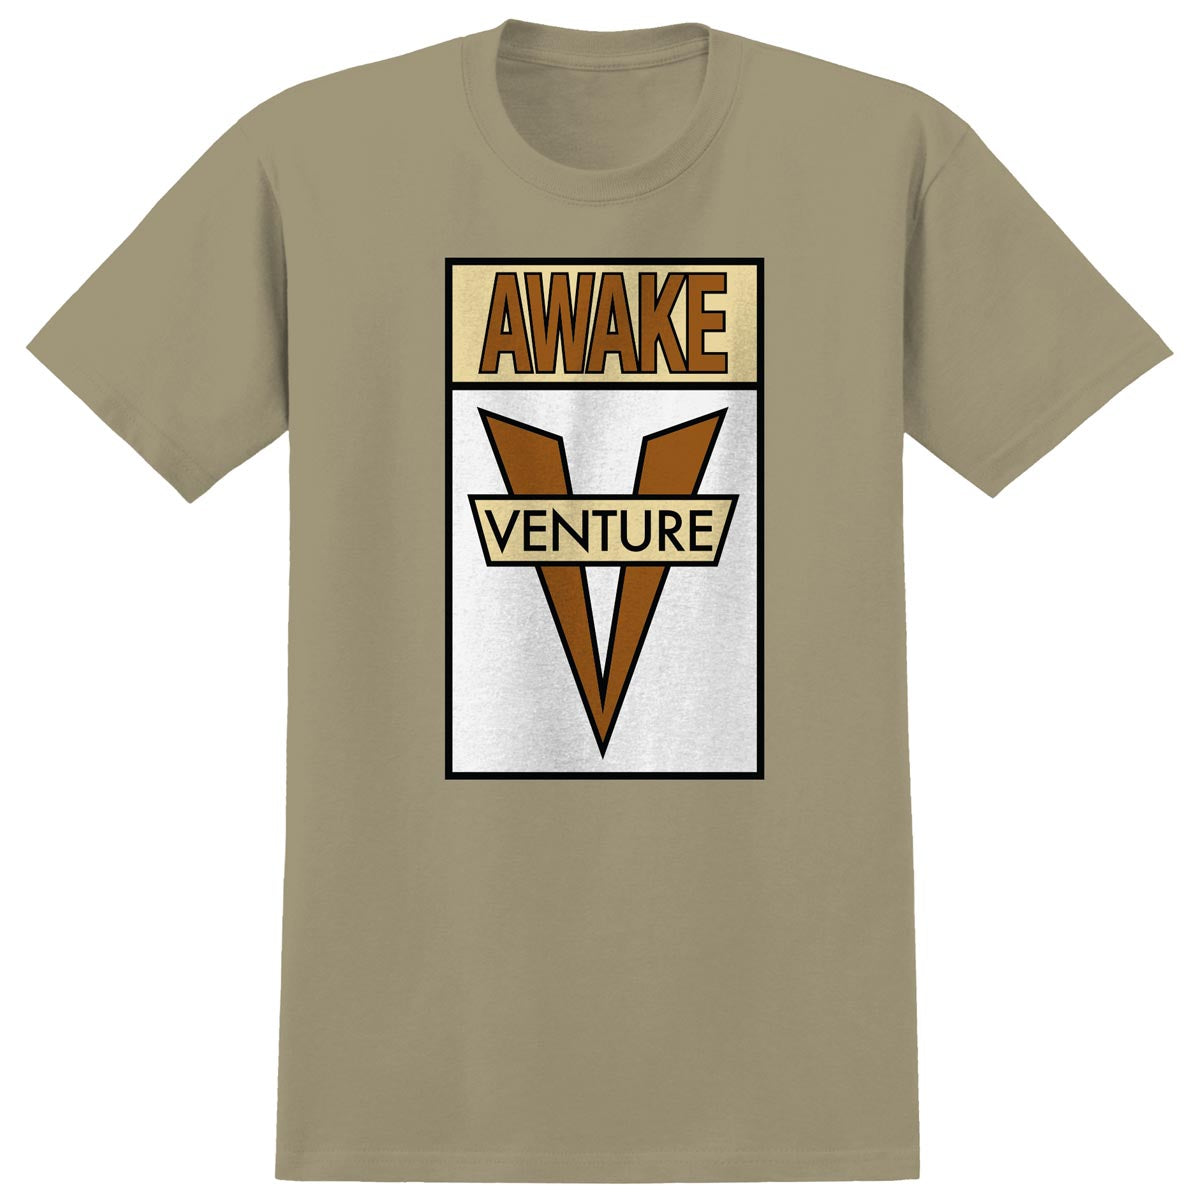 Venture Awake T-Shirt - Sand image 1